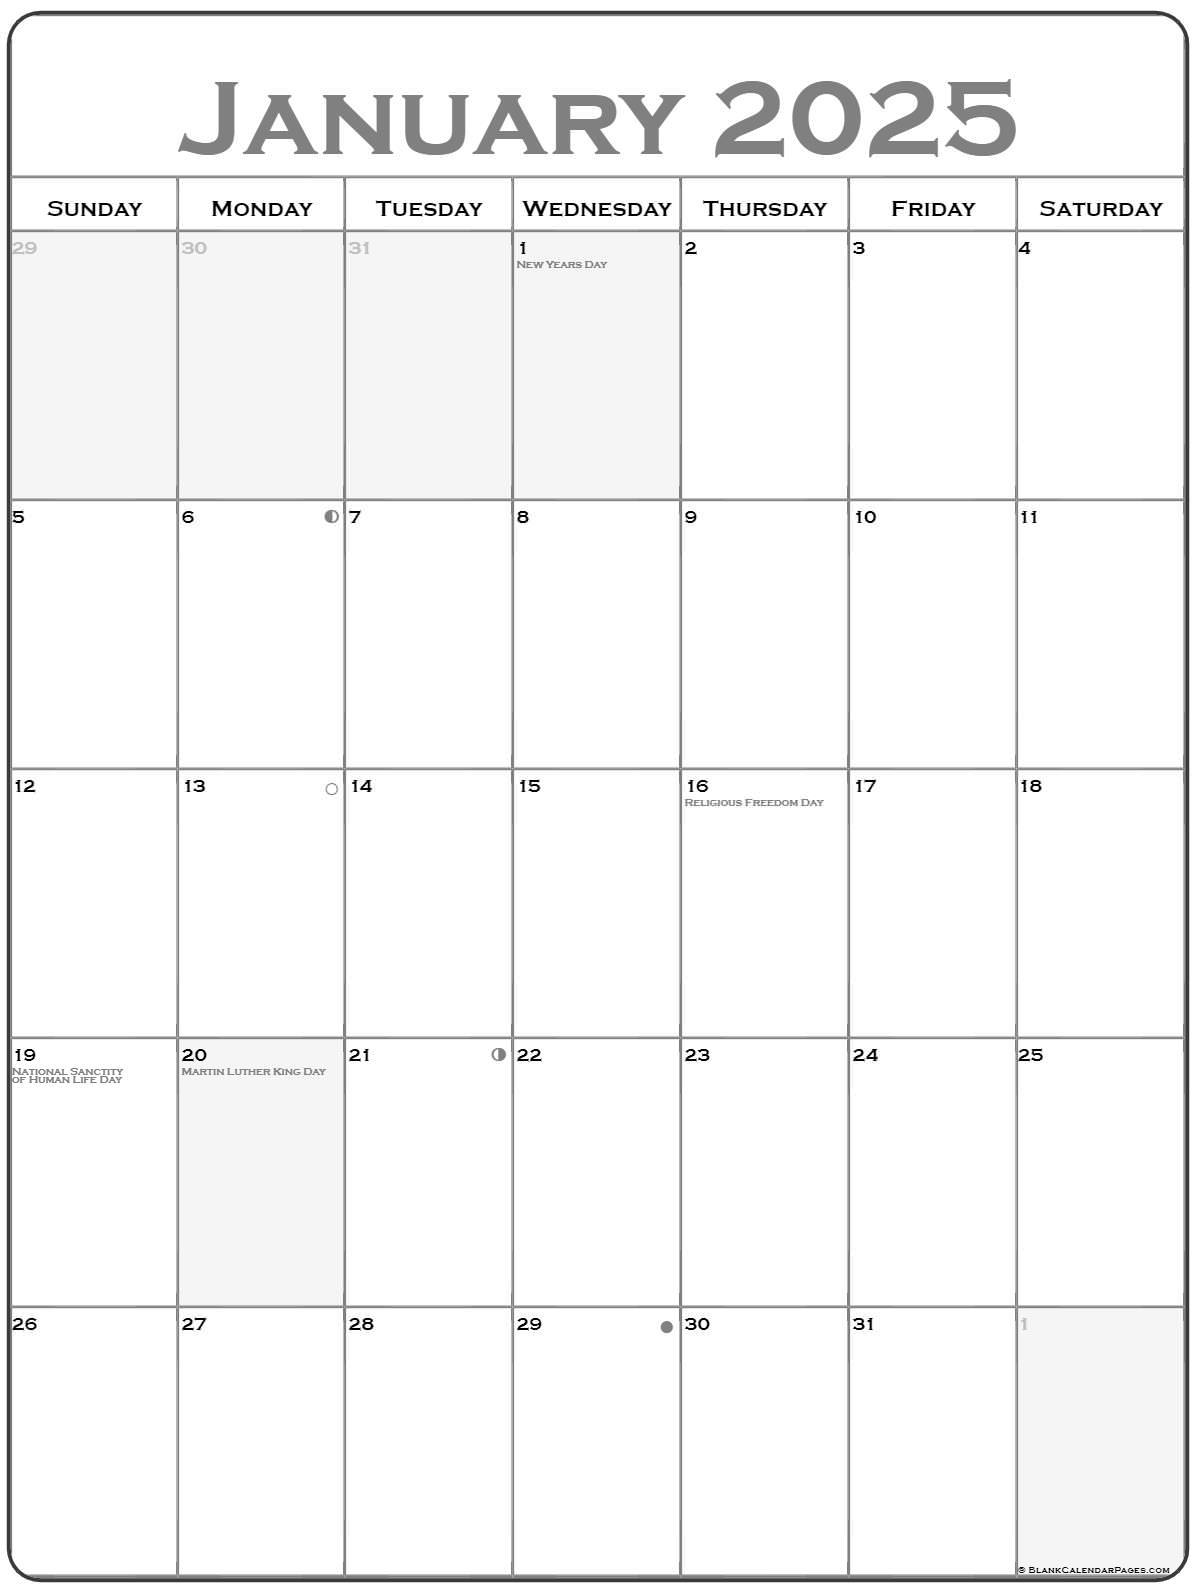 january-2025-calendar-printable-with-holidays-whatisthedatetoday-com